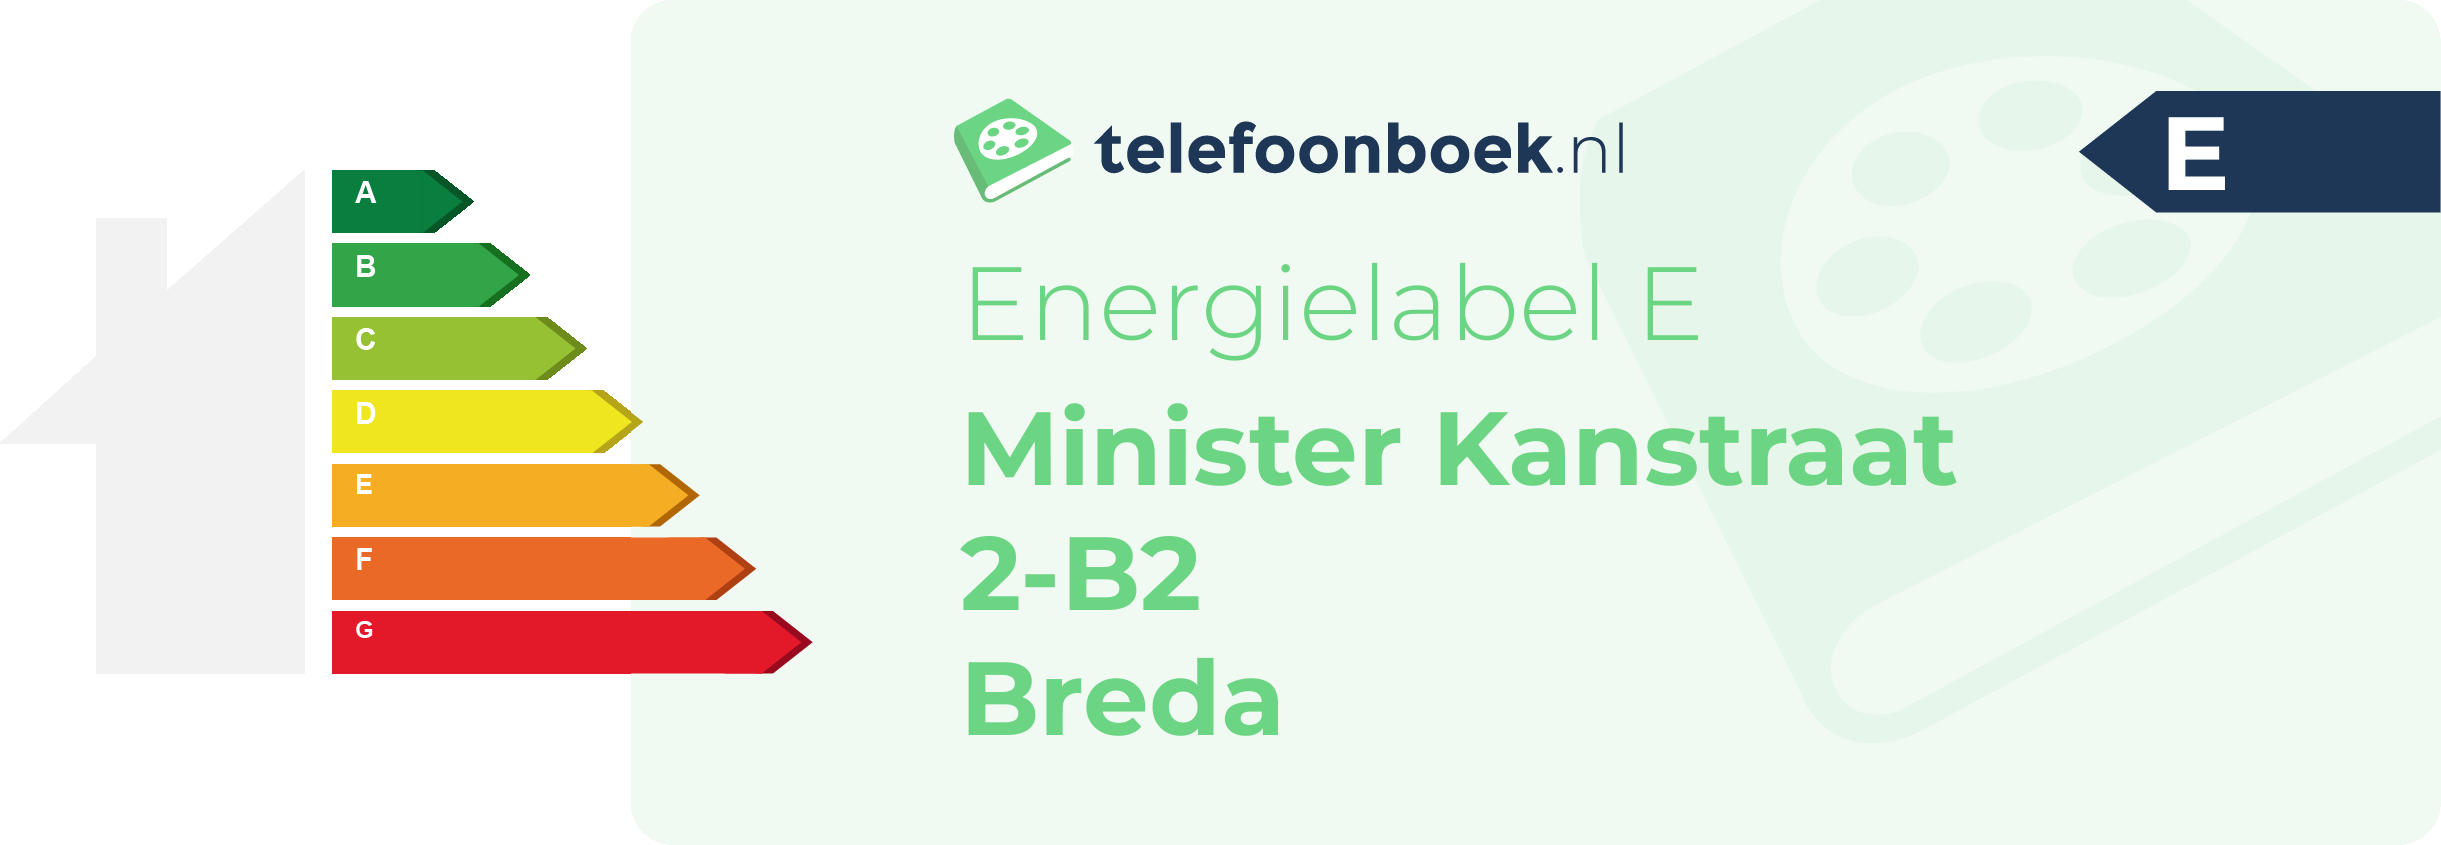 Energielabel Minister Kanstraat 2-B2 Breda